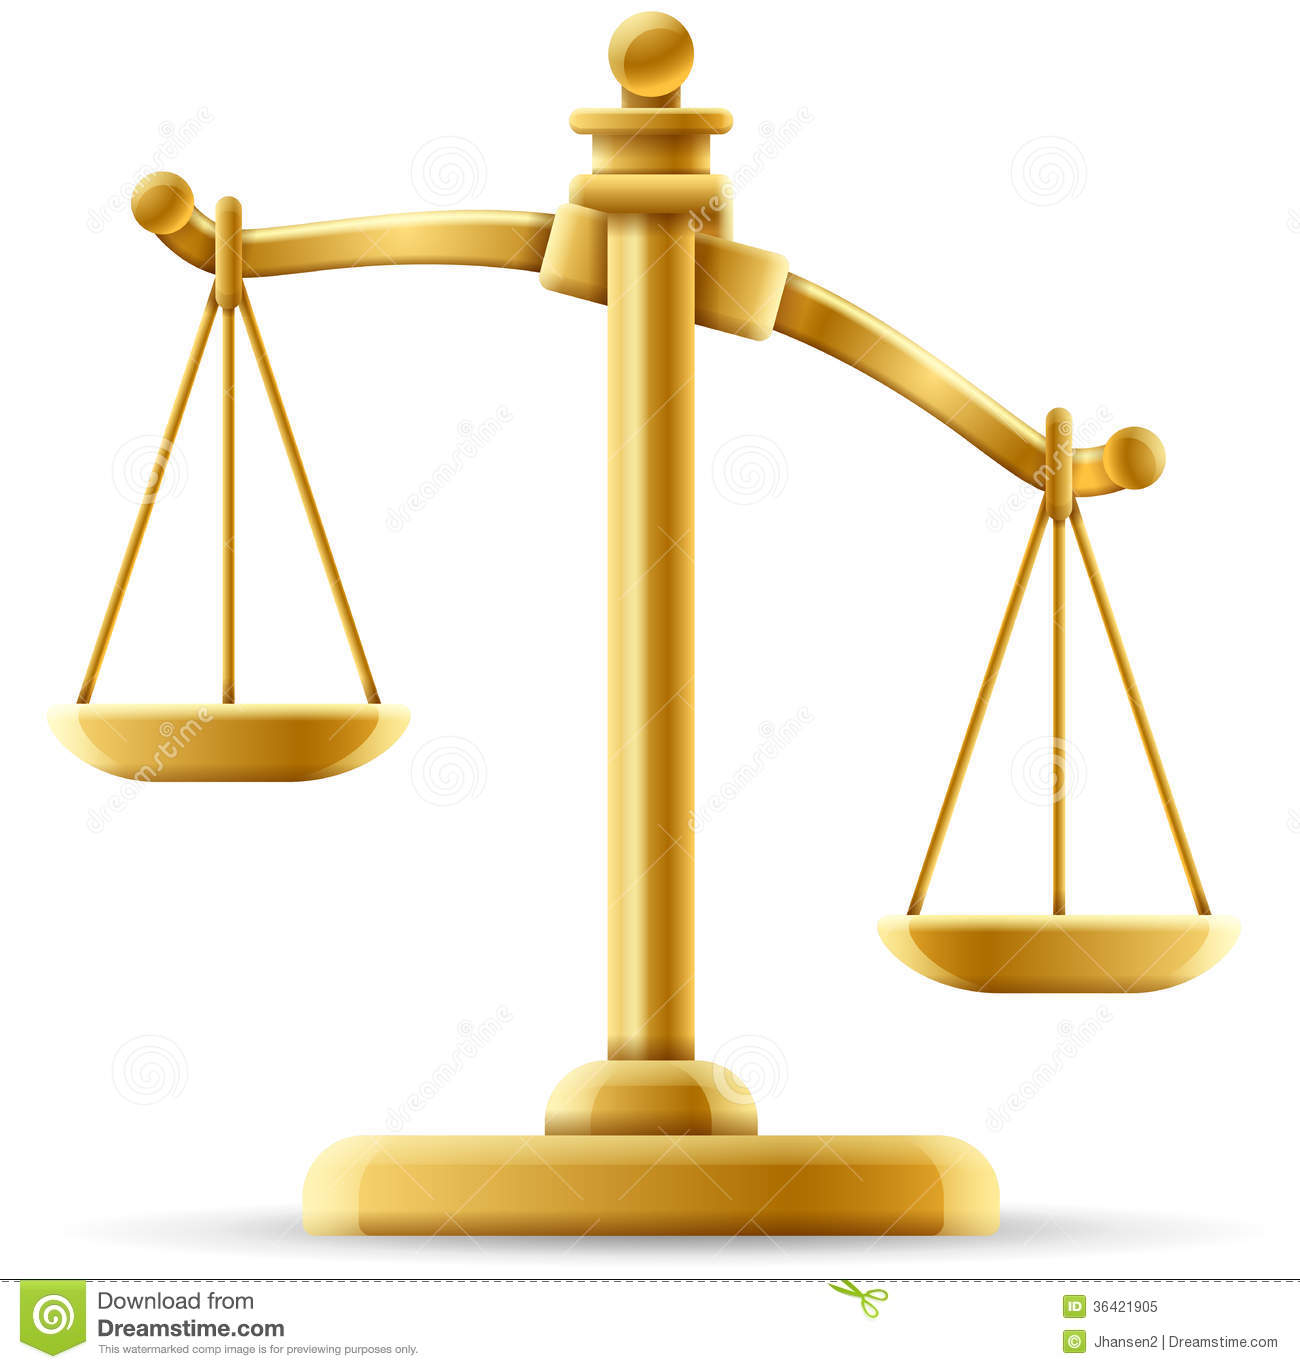 Unbalanced Justice Scale Royalty Free Stock Photo   Image  36421905